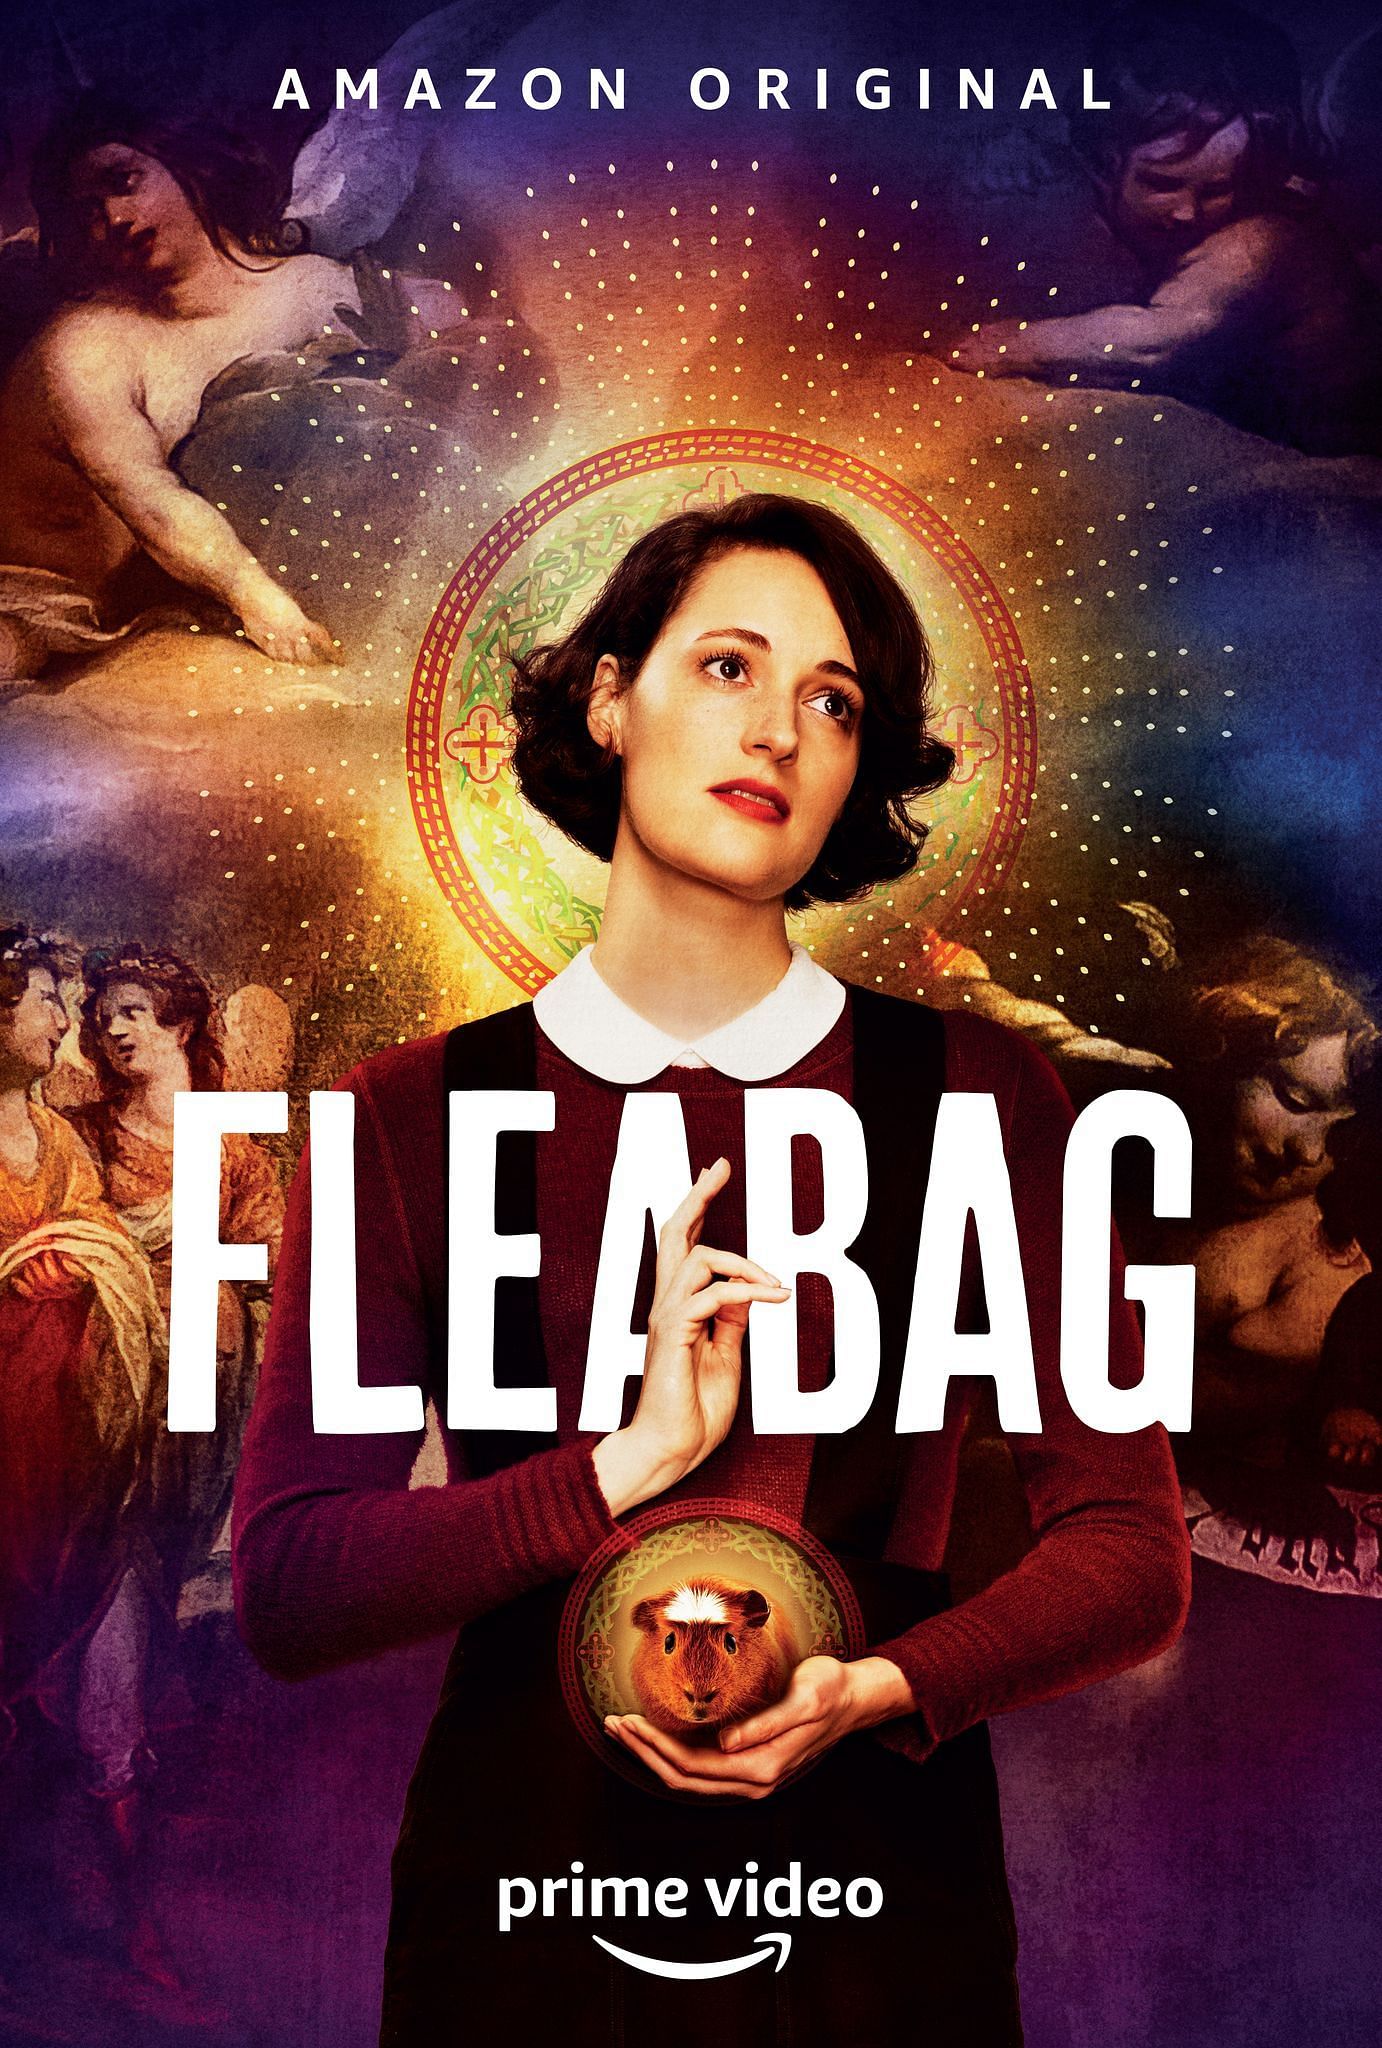 Fleabag (Image via BBC Three)